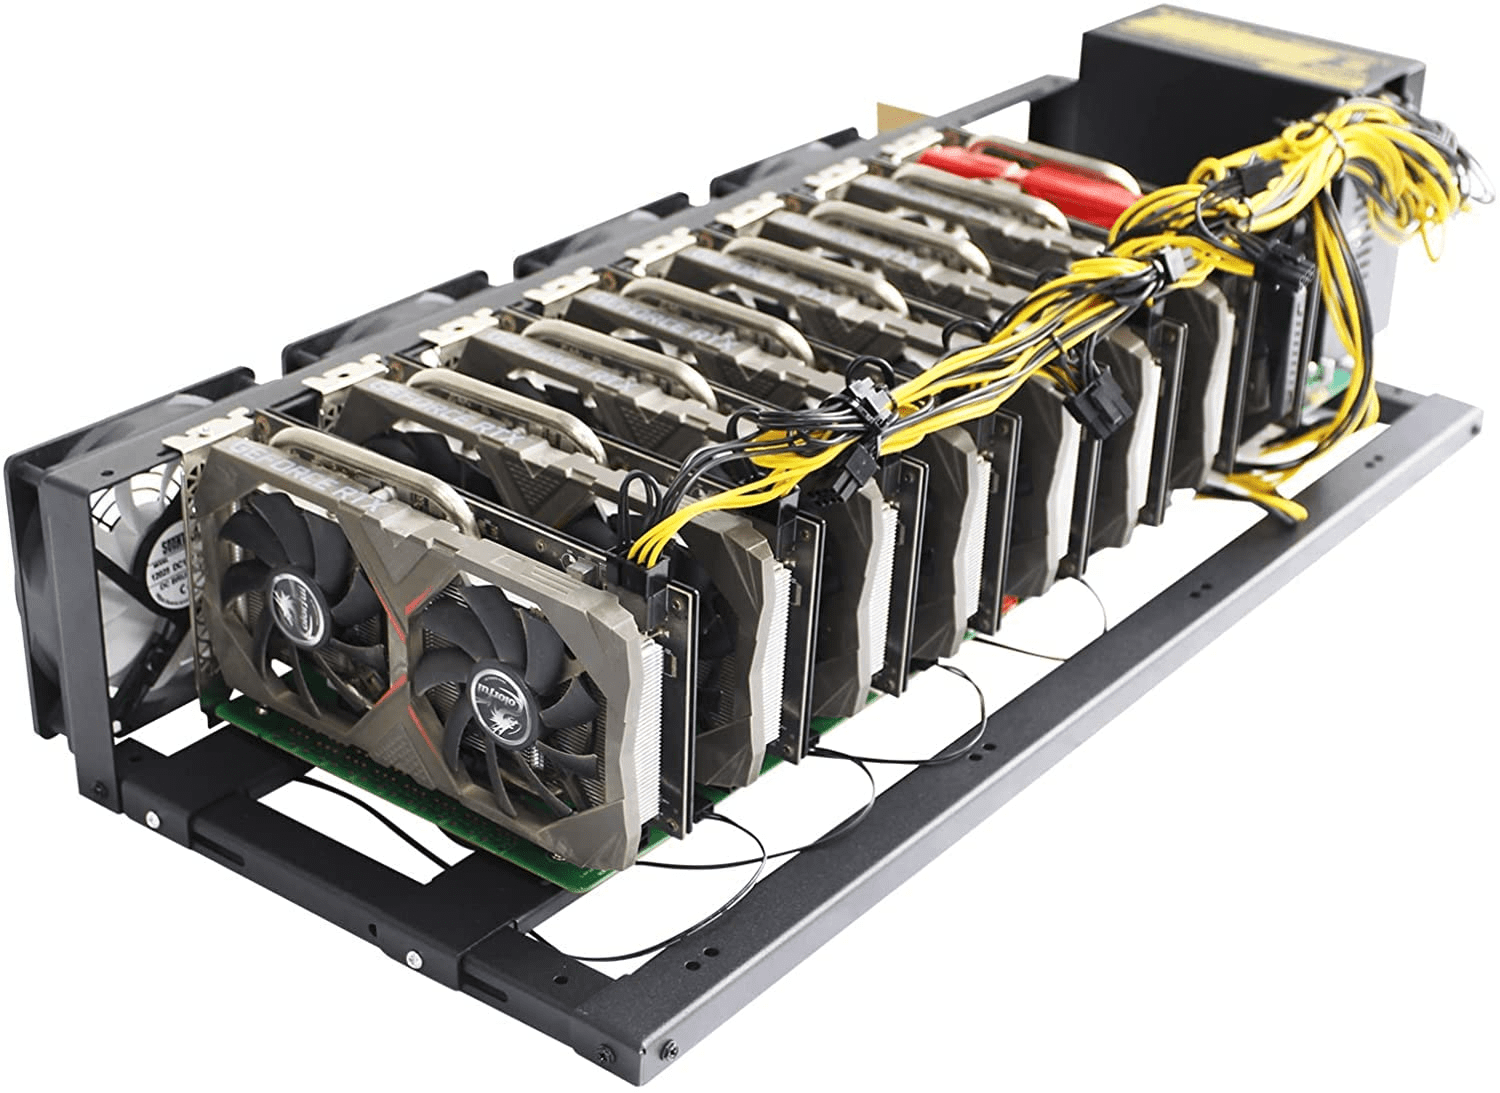 GPU MINING - 8 card Crypto Rig - Ethereum - Cryptocurrency mining -Frame Mining Machine (EXCLUDING GPU) - Walmart.com